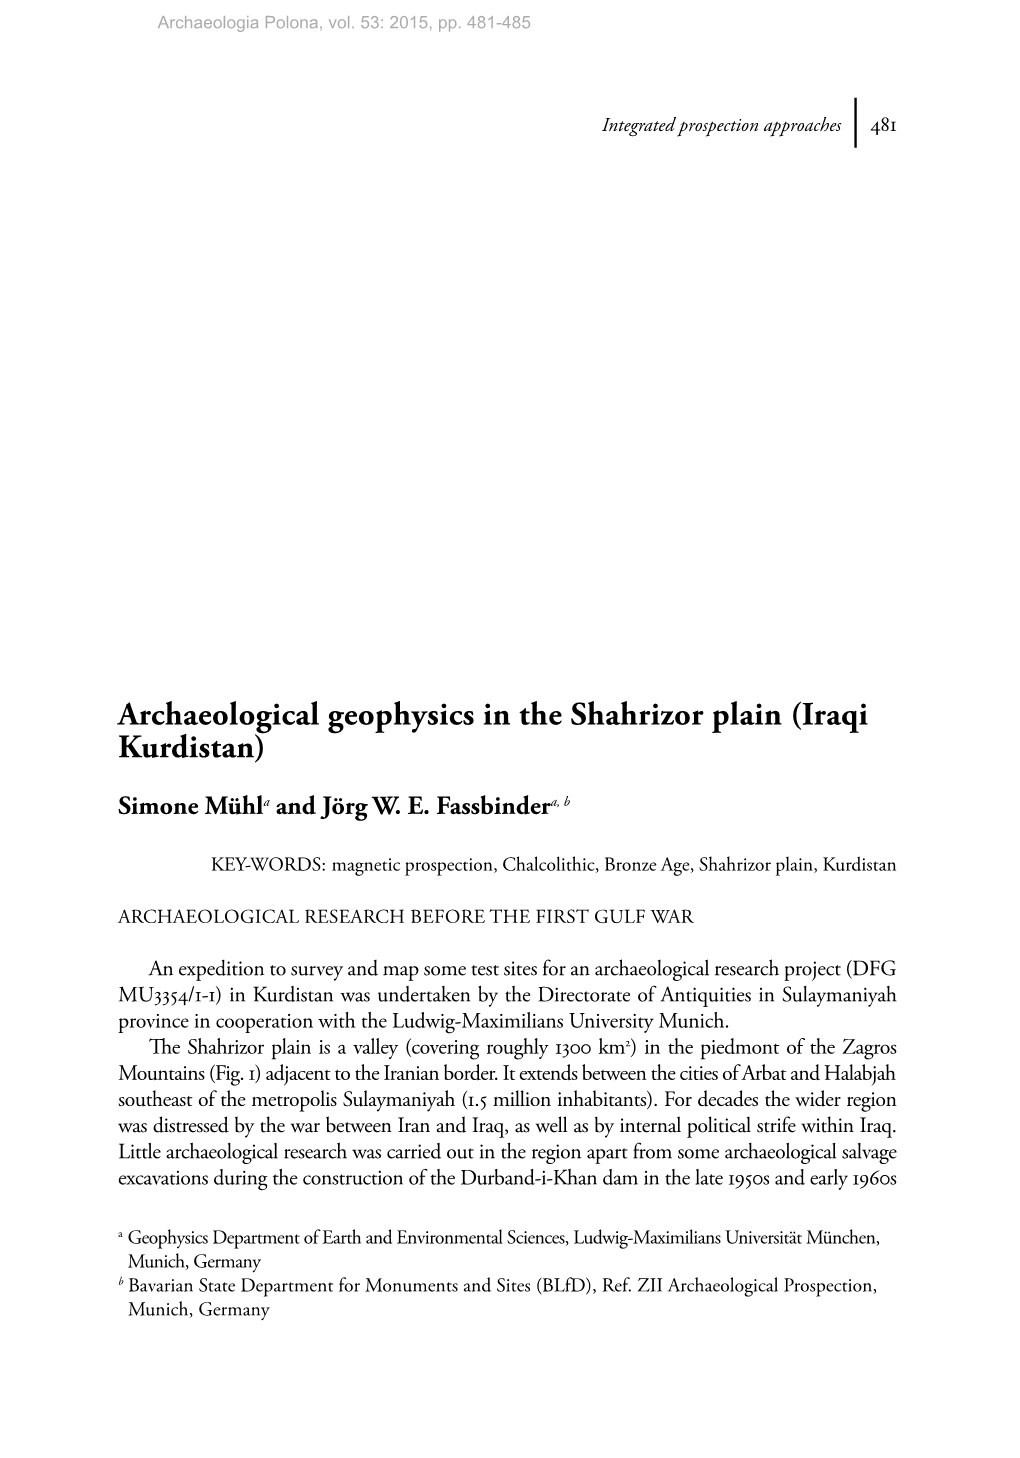 Archaeological Geophysics in the Shahrizor Plain (Iraqi Kurdistan)